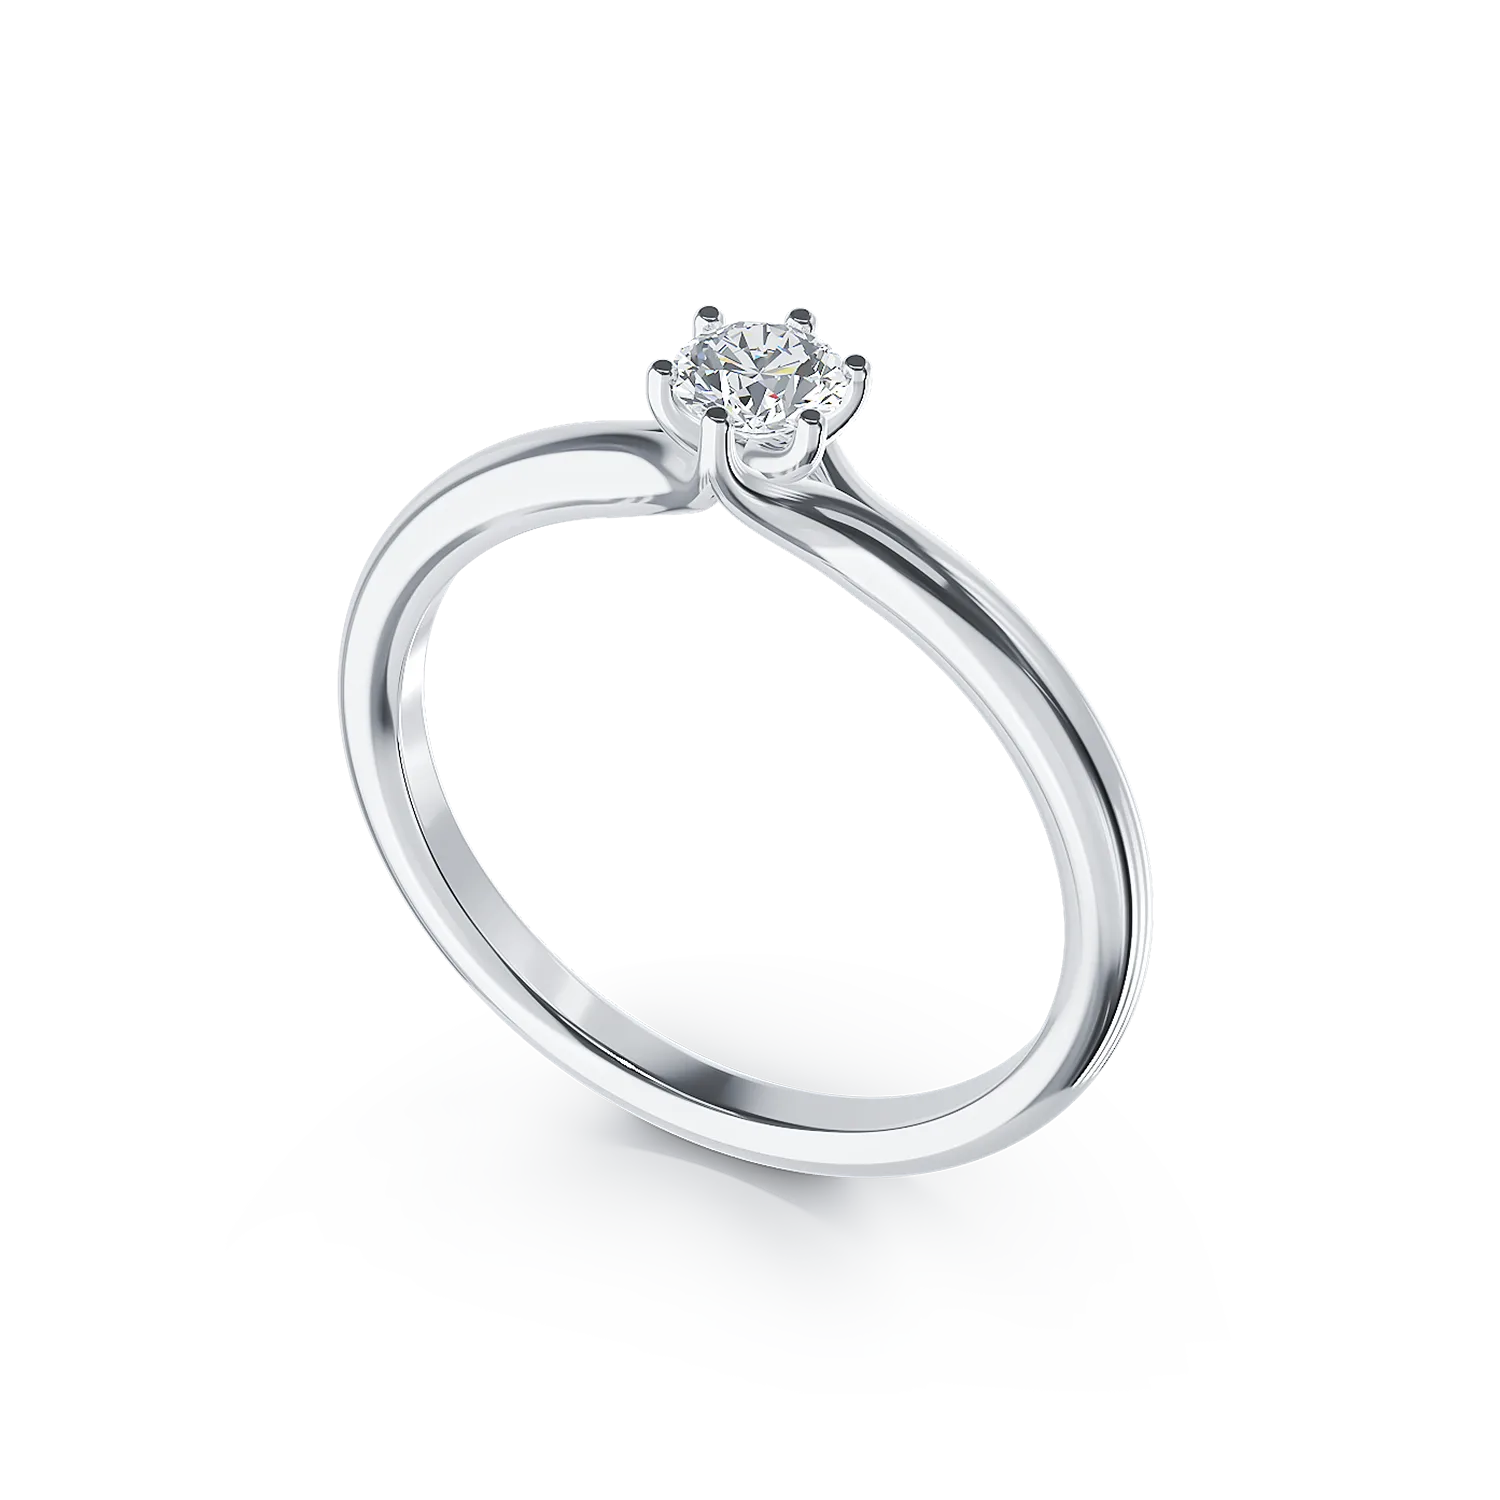 Inel de logodna din aur alb cu diamant solitaire de 0.199ct